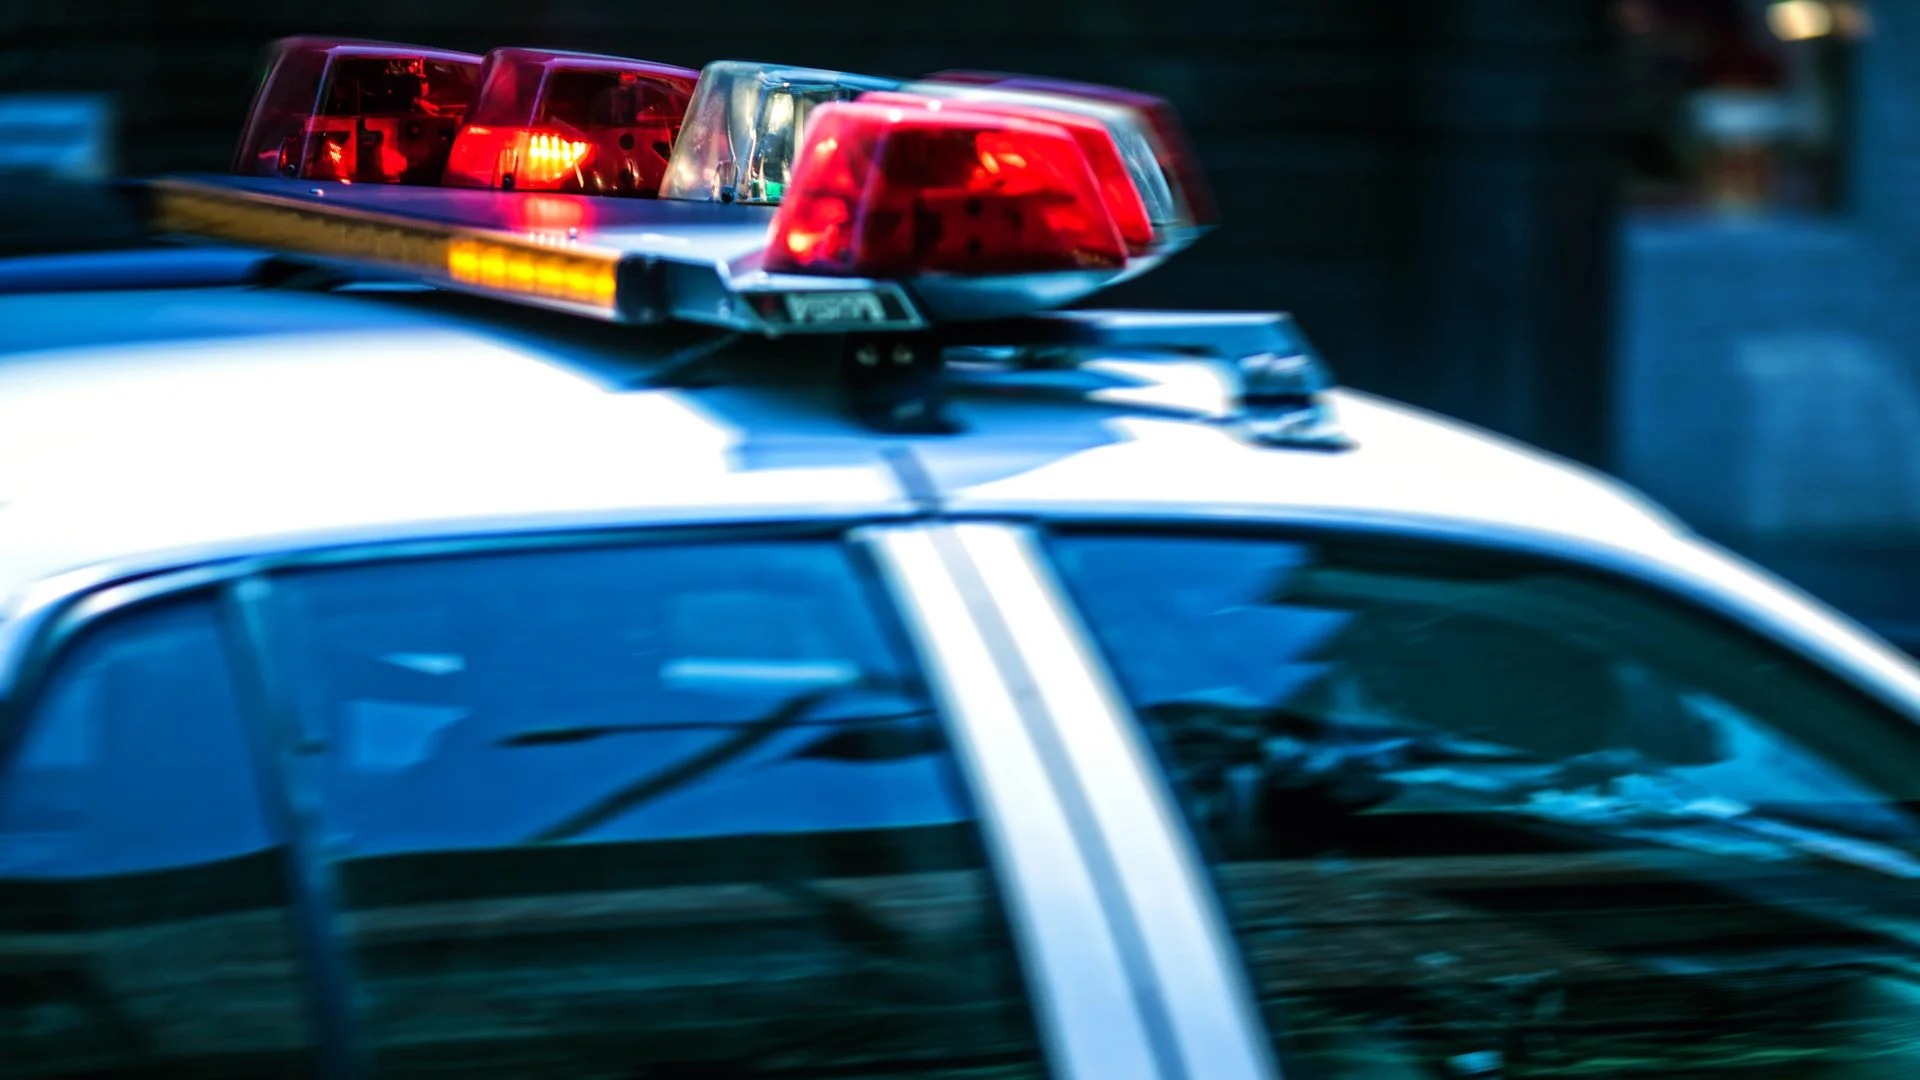   
																Massachusetts man arrested for fraudulent vehicle registrations 
															 